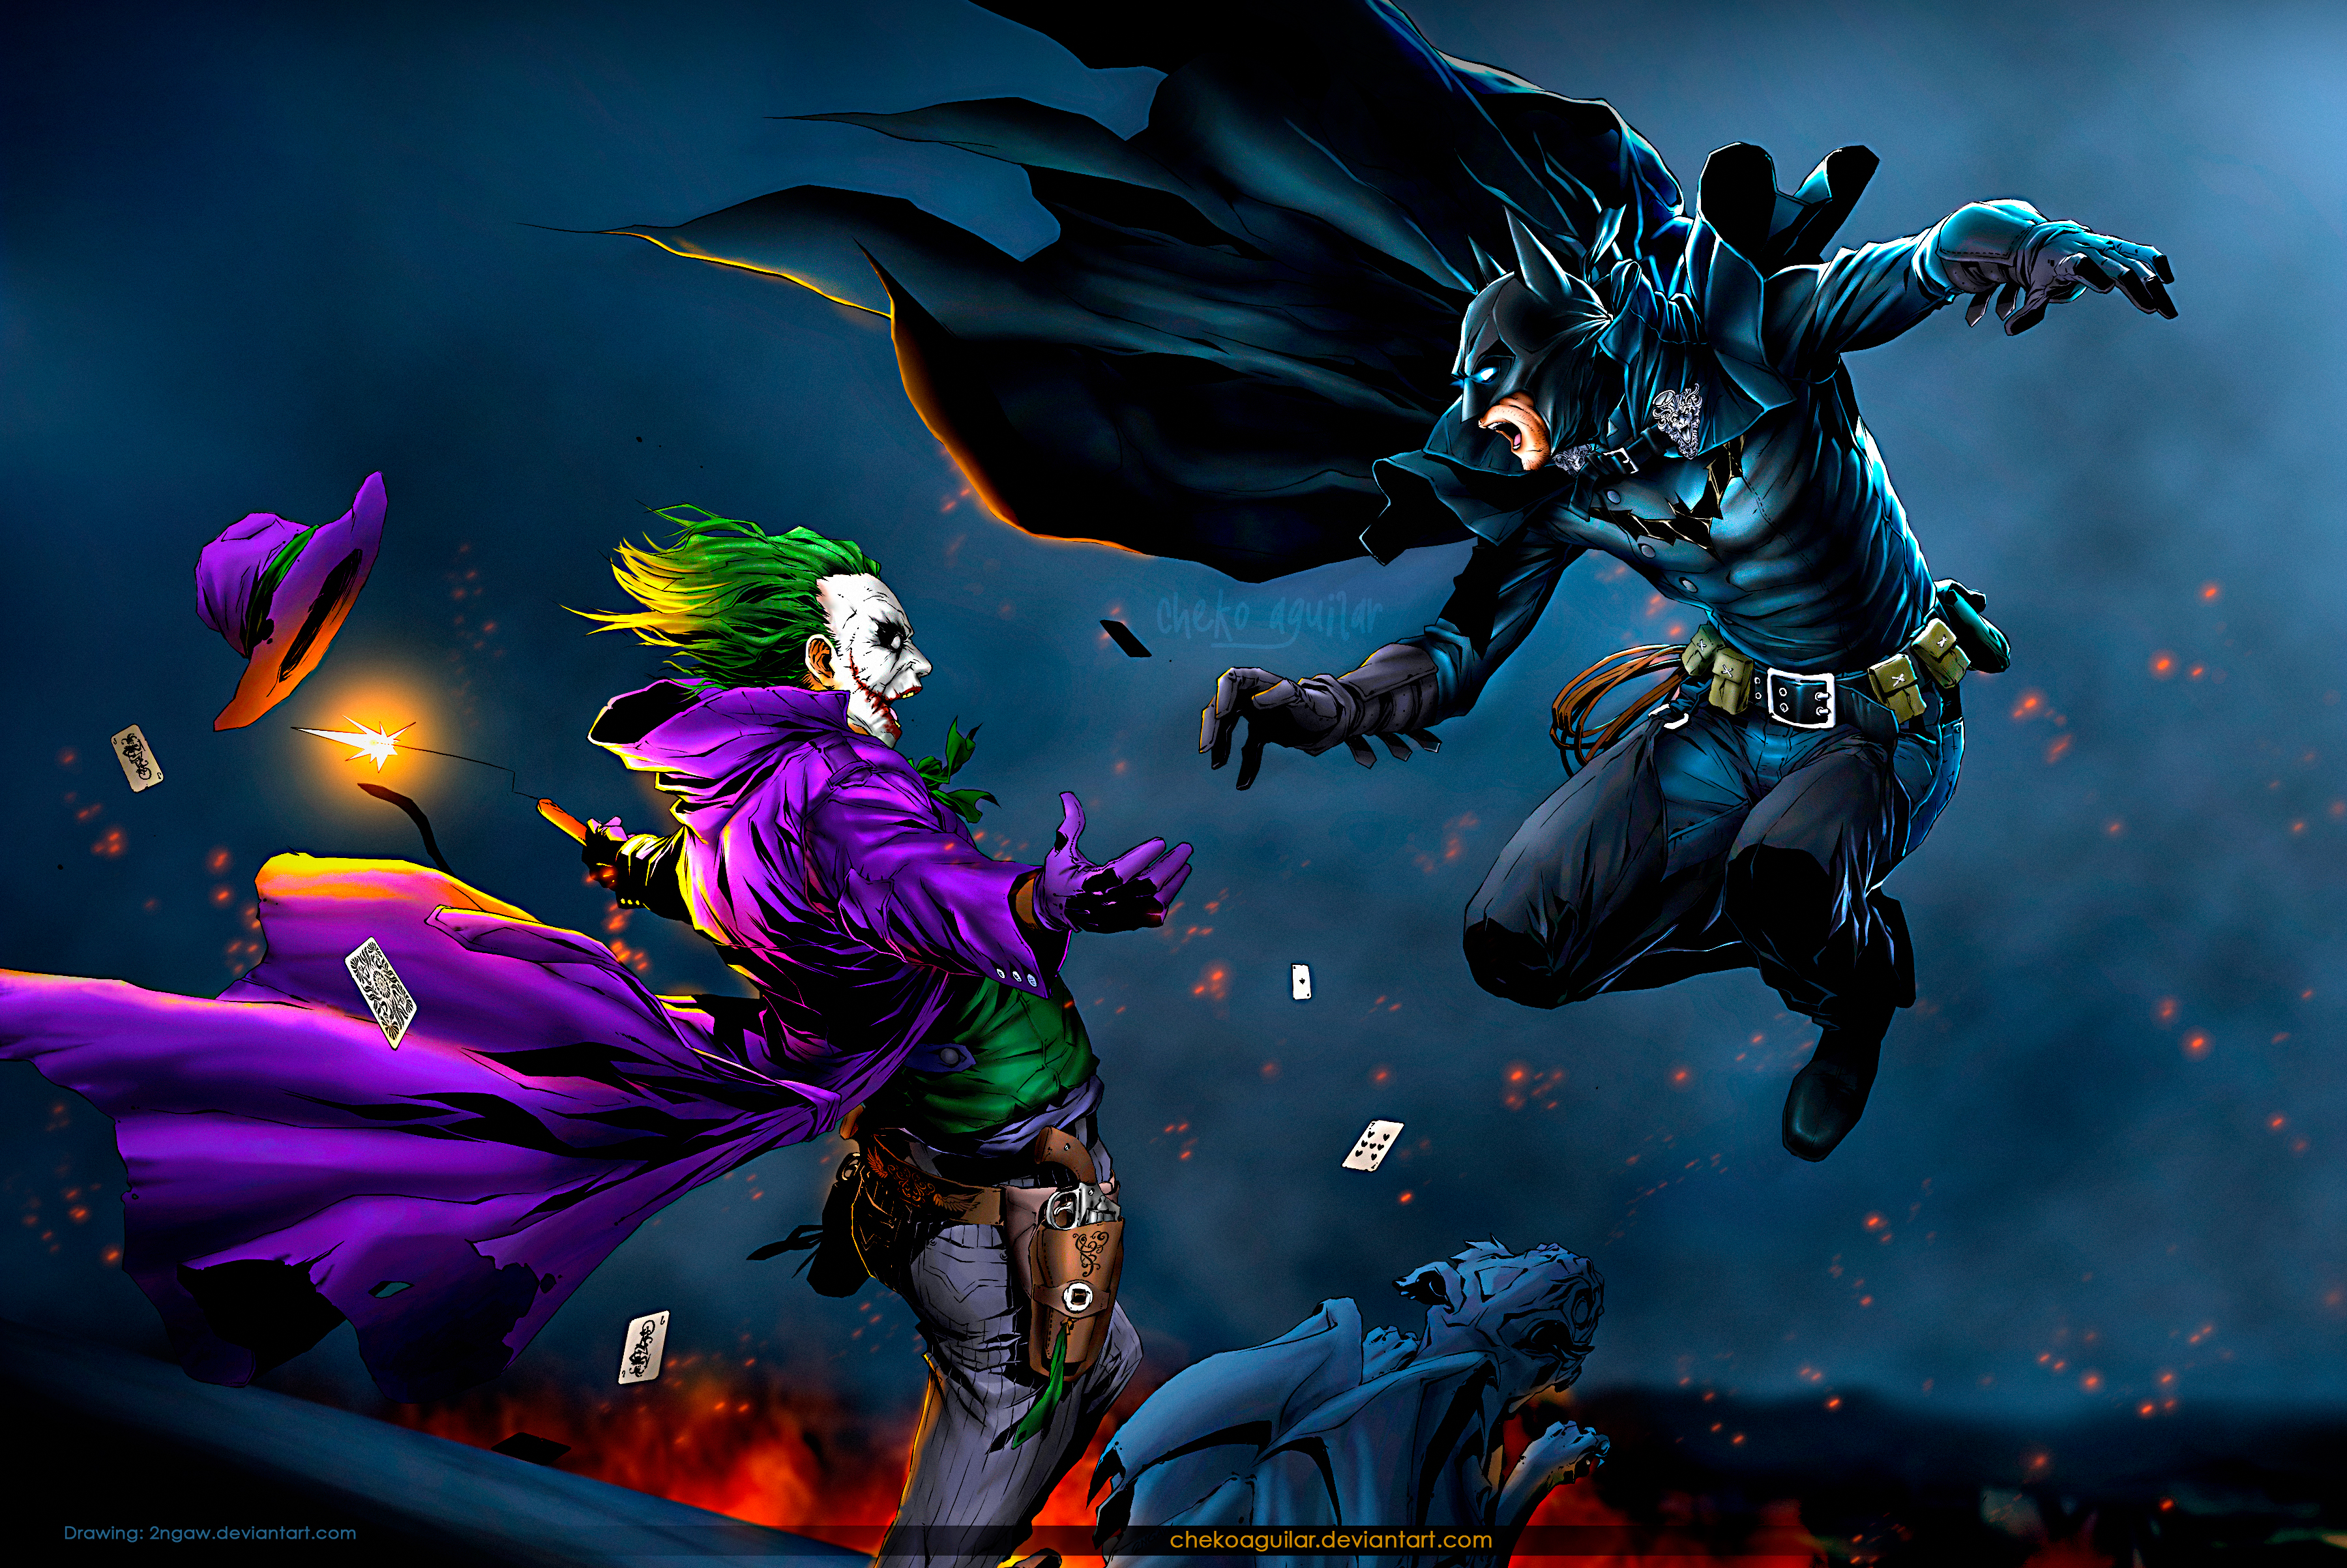 Batman vs Joker Wallpaper - WallpaperSafari